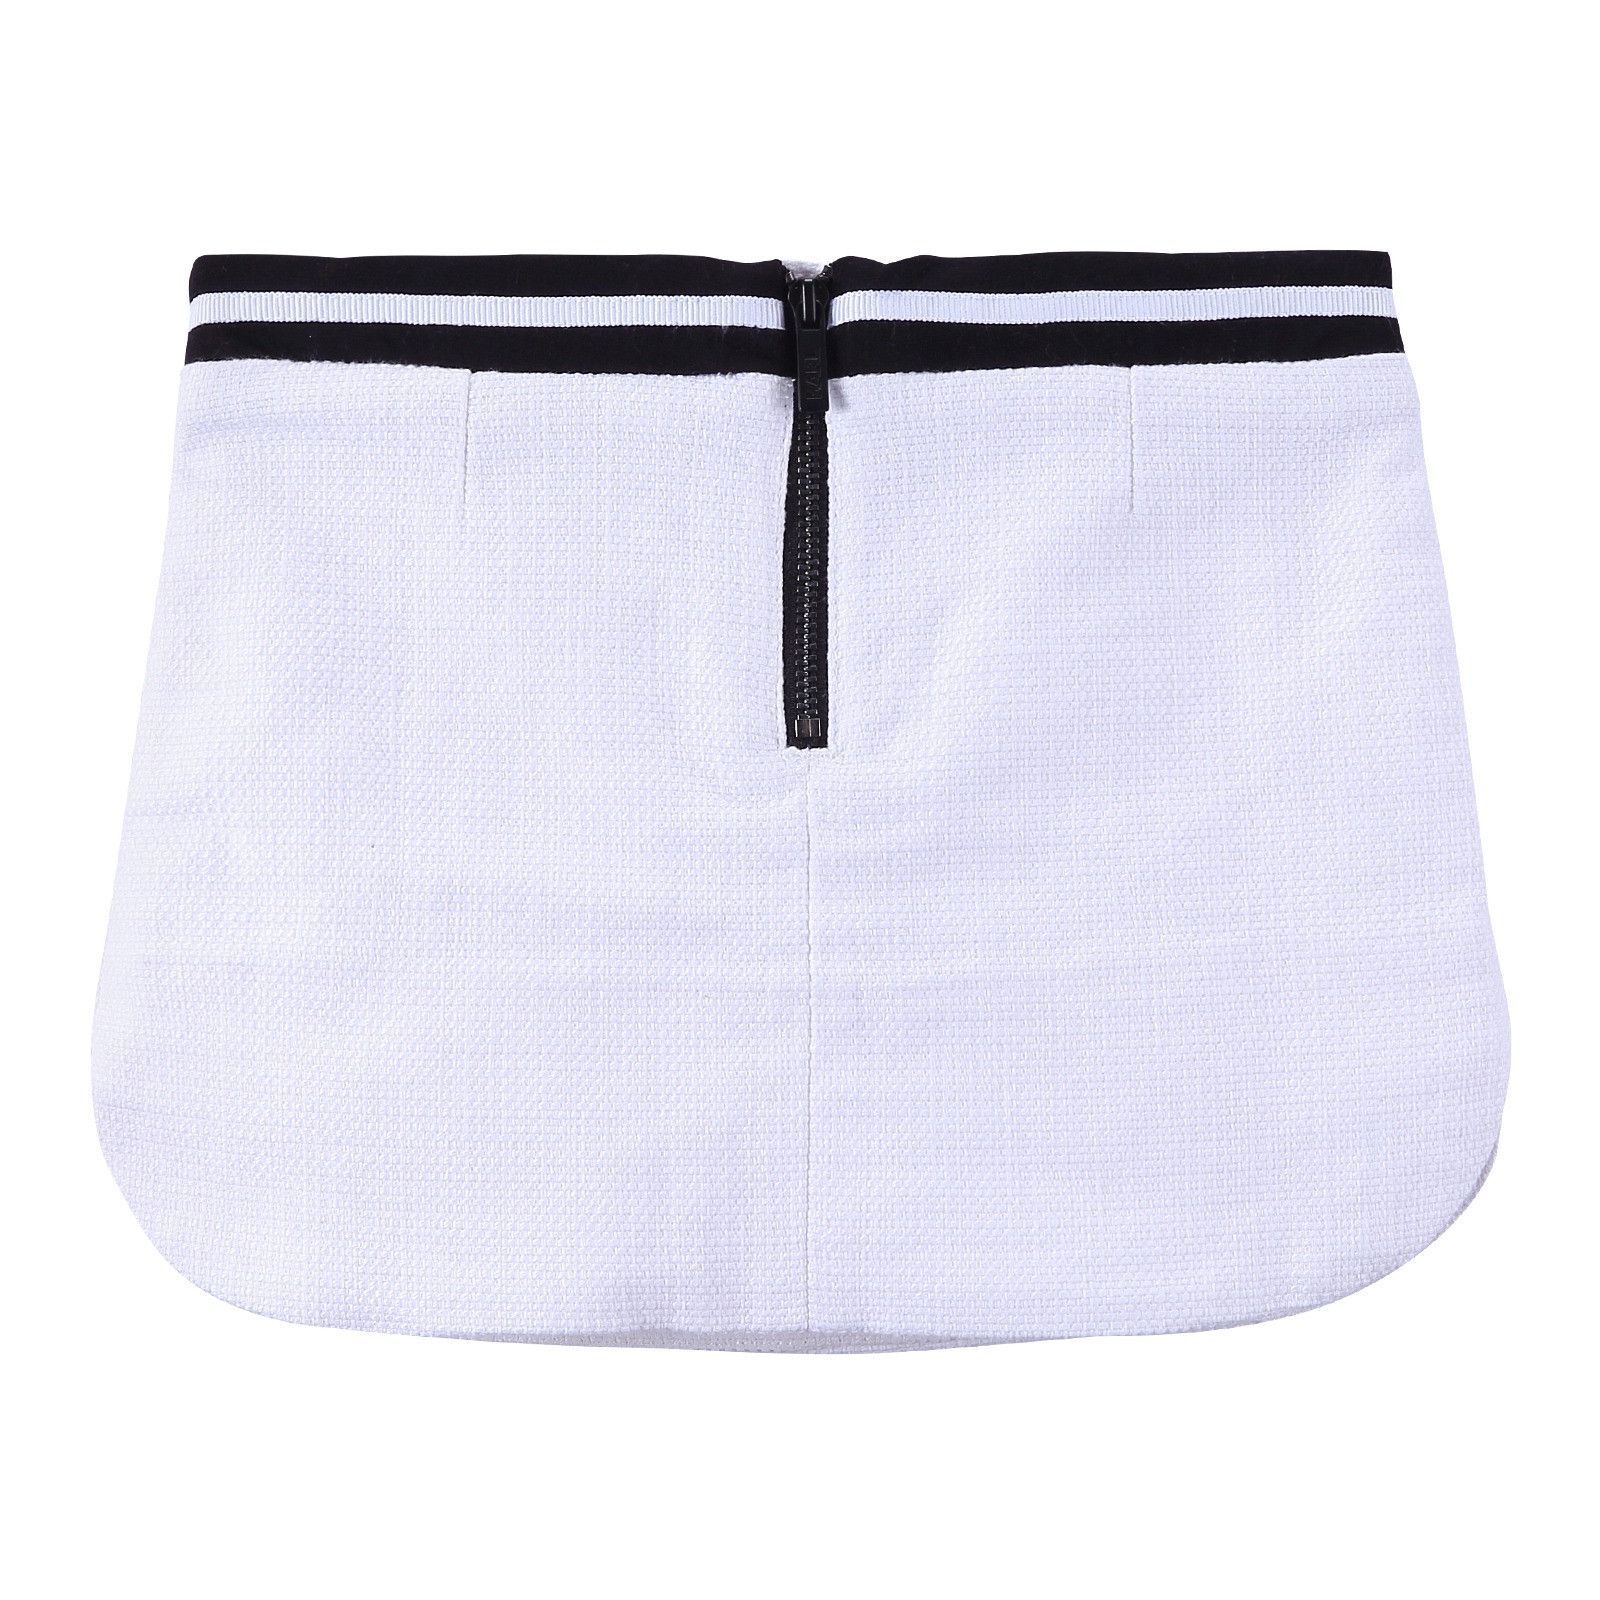 Girls White Elasticity Cotton Skirt With Black Waistband - CÉMAROSE | Children's Fashion Store - 2